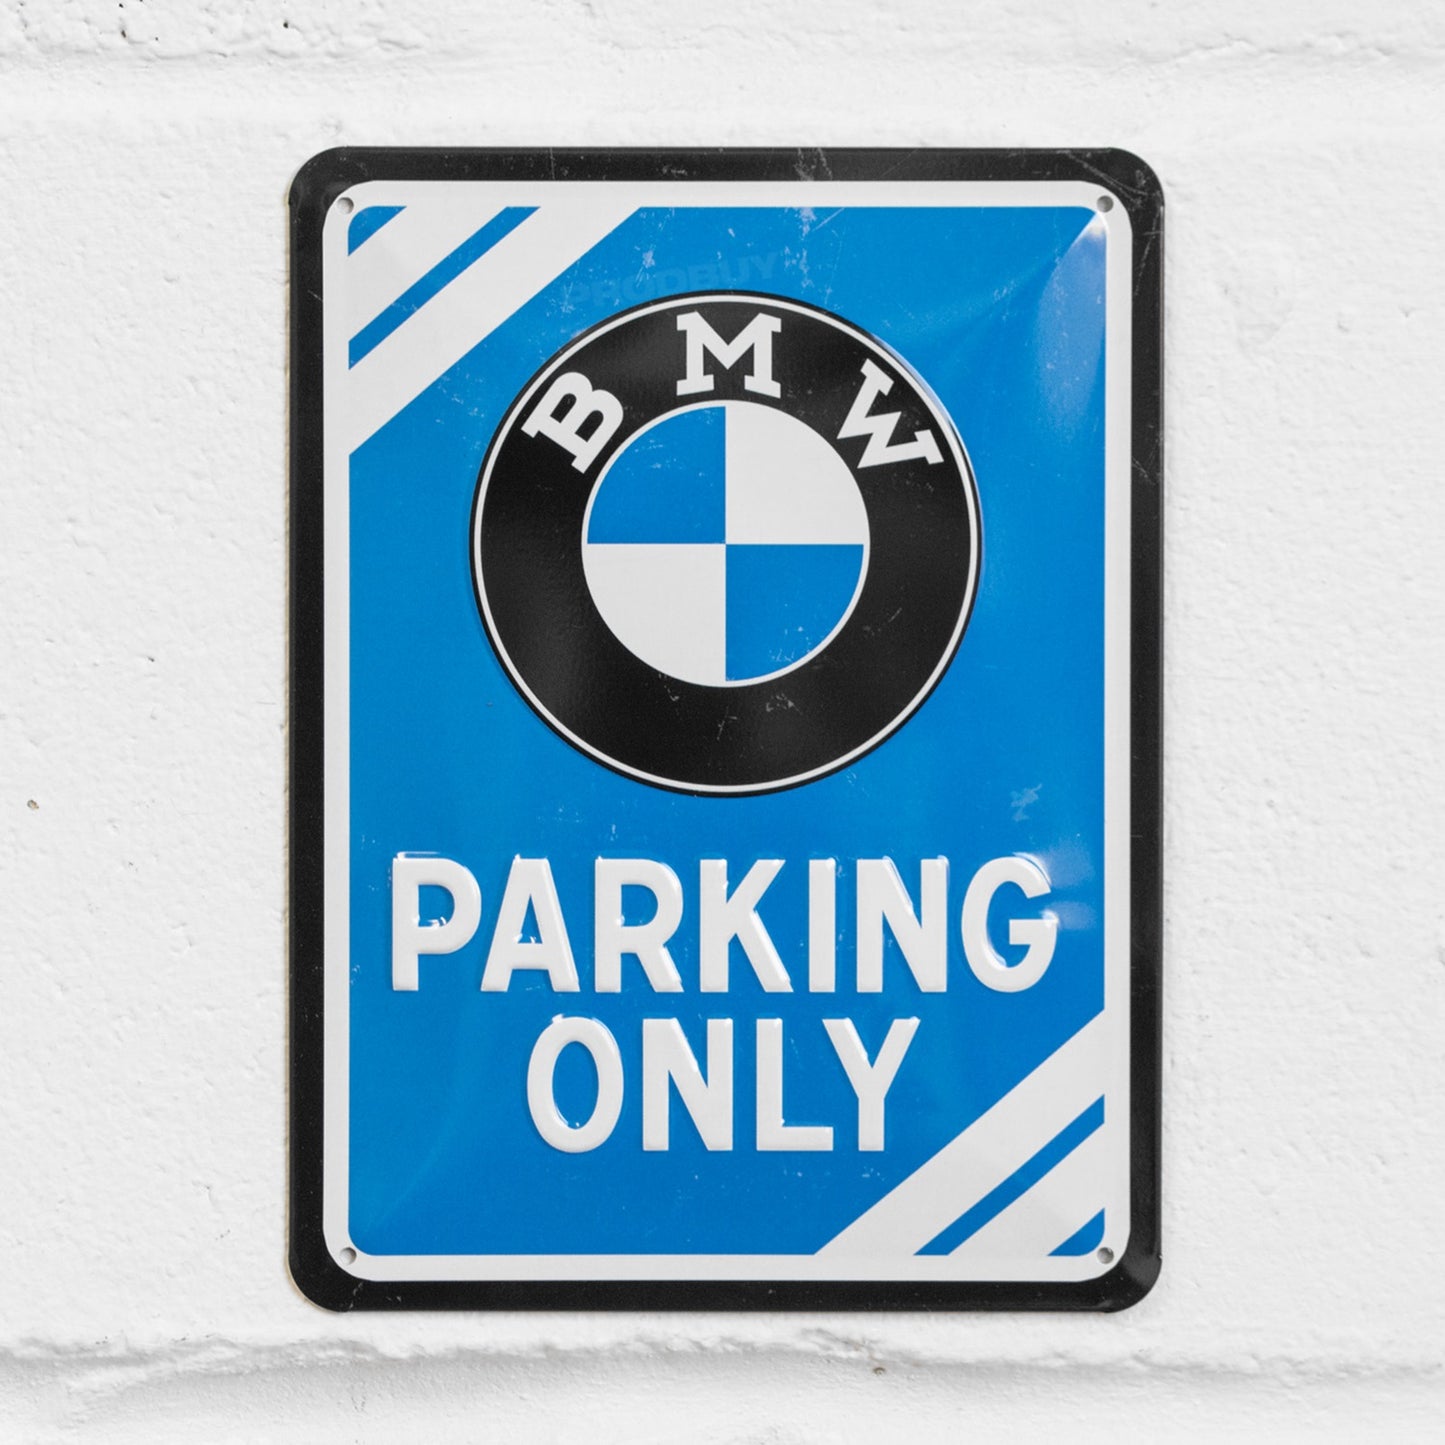 BMW Parking Only 20cm Metal Garage Wall Sign